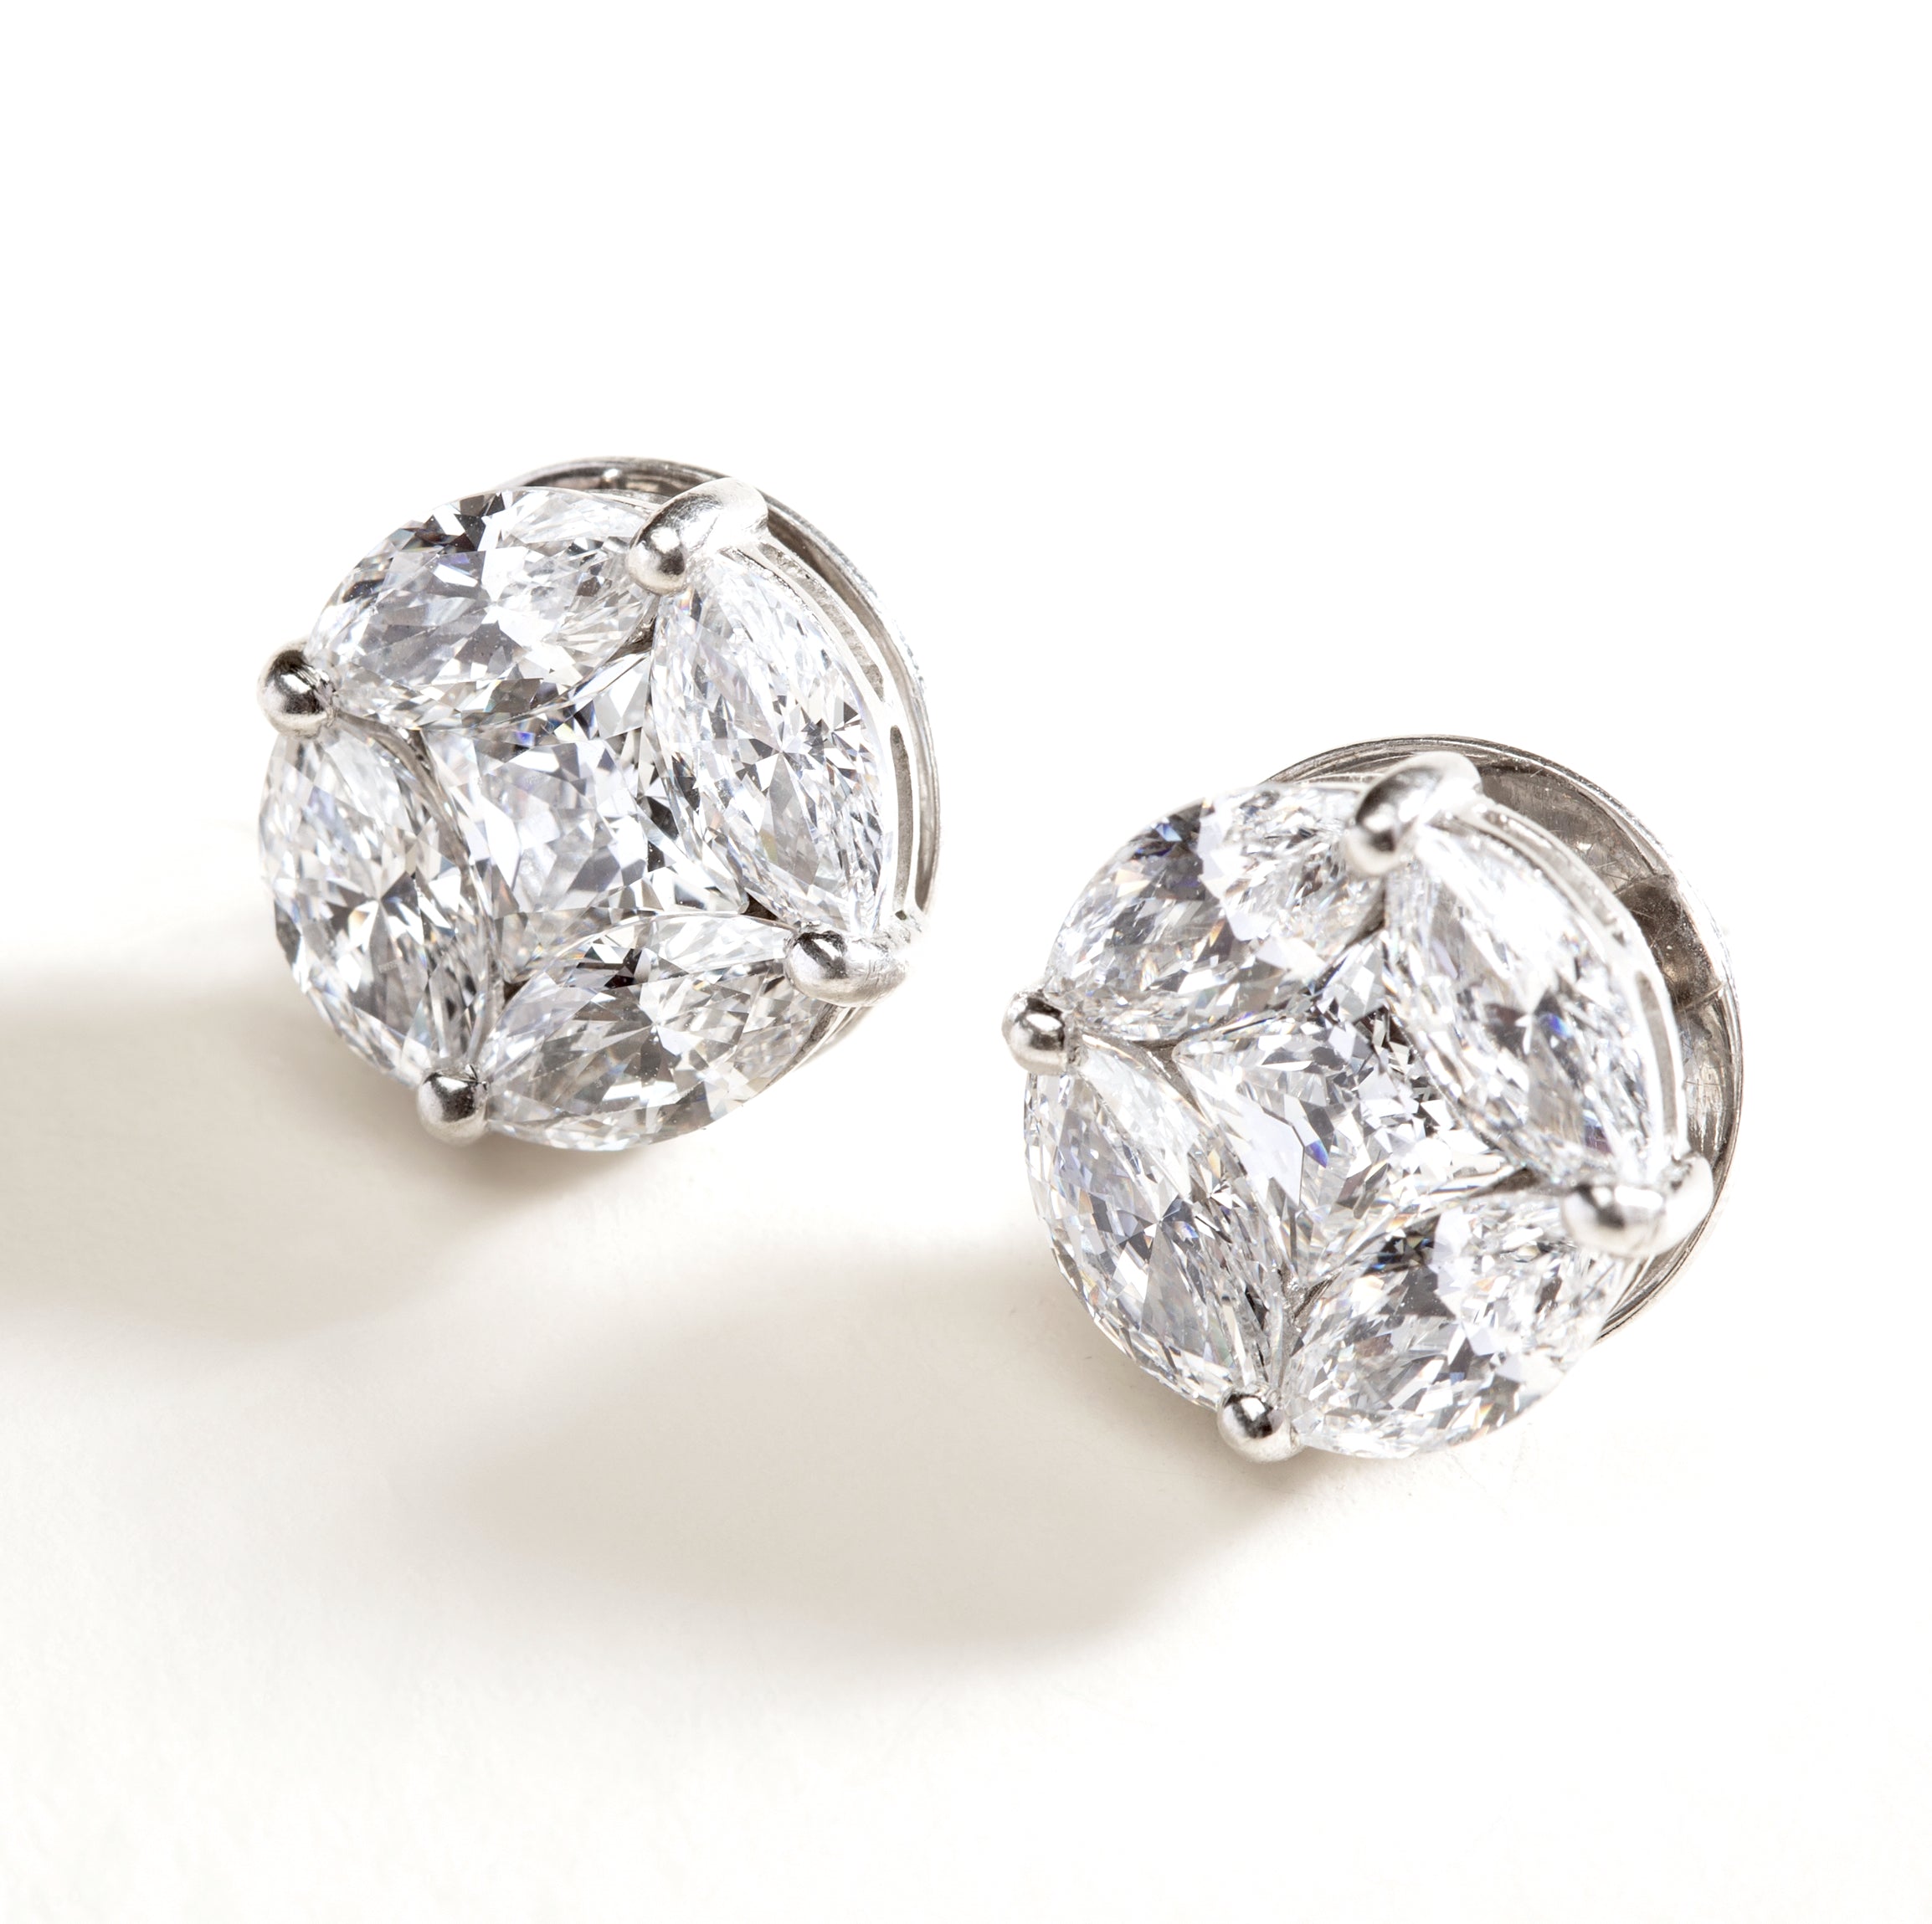 18 karat white gold and 16 carat diamond stud earrings by fine jewelry designer ESTAA